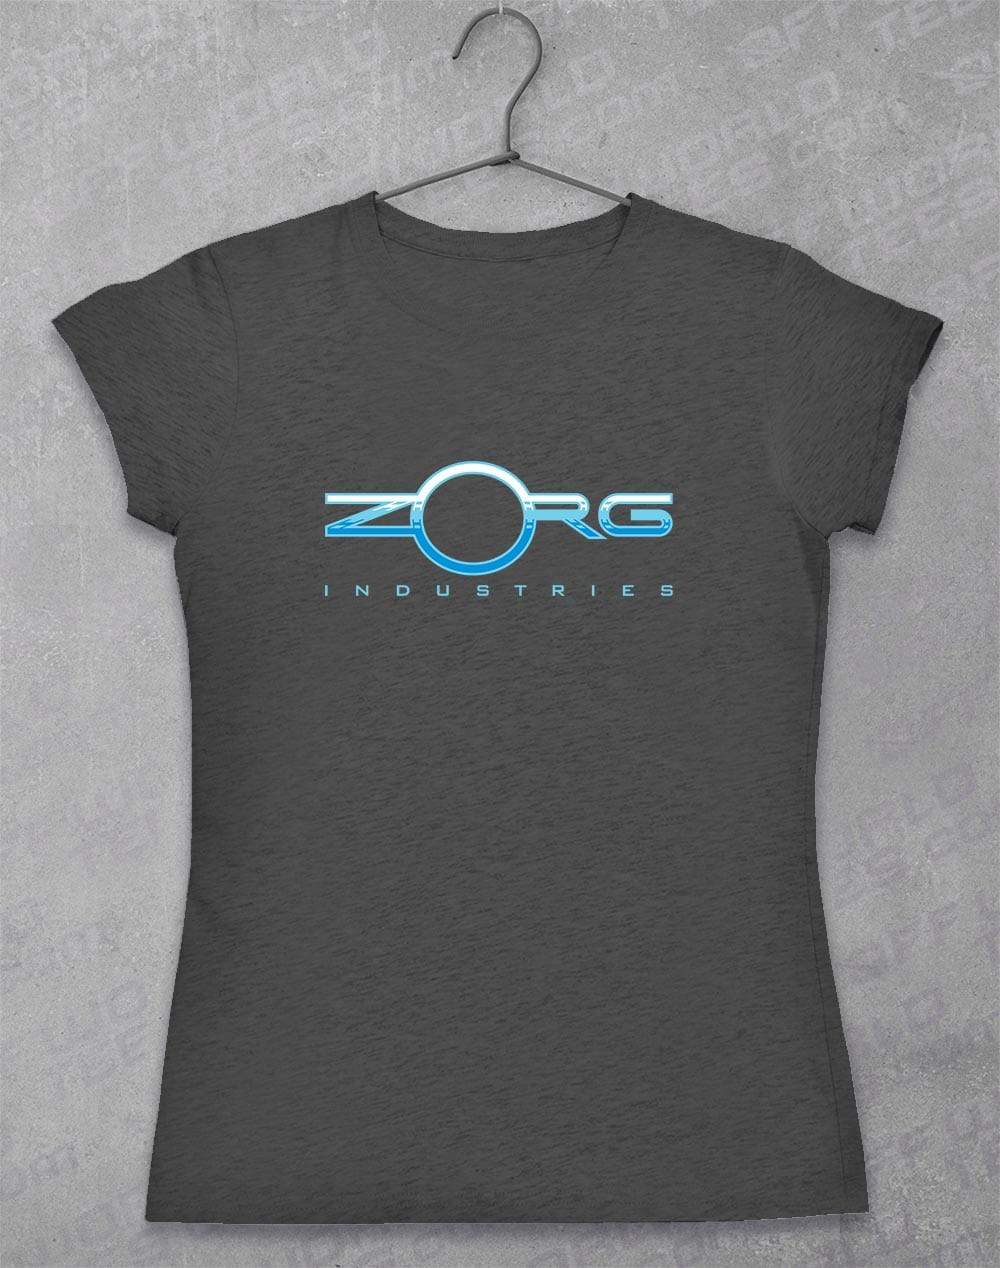 Zorg Women's T-Shirt 8-10 / Dark Heather  - Off World Tees